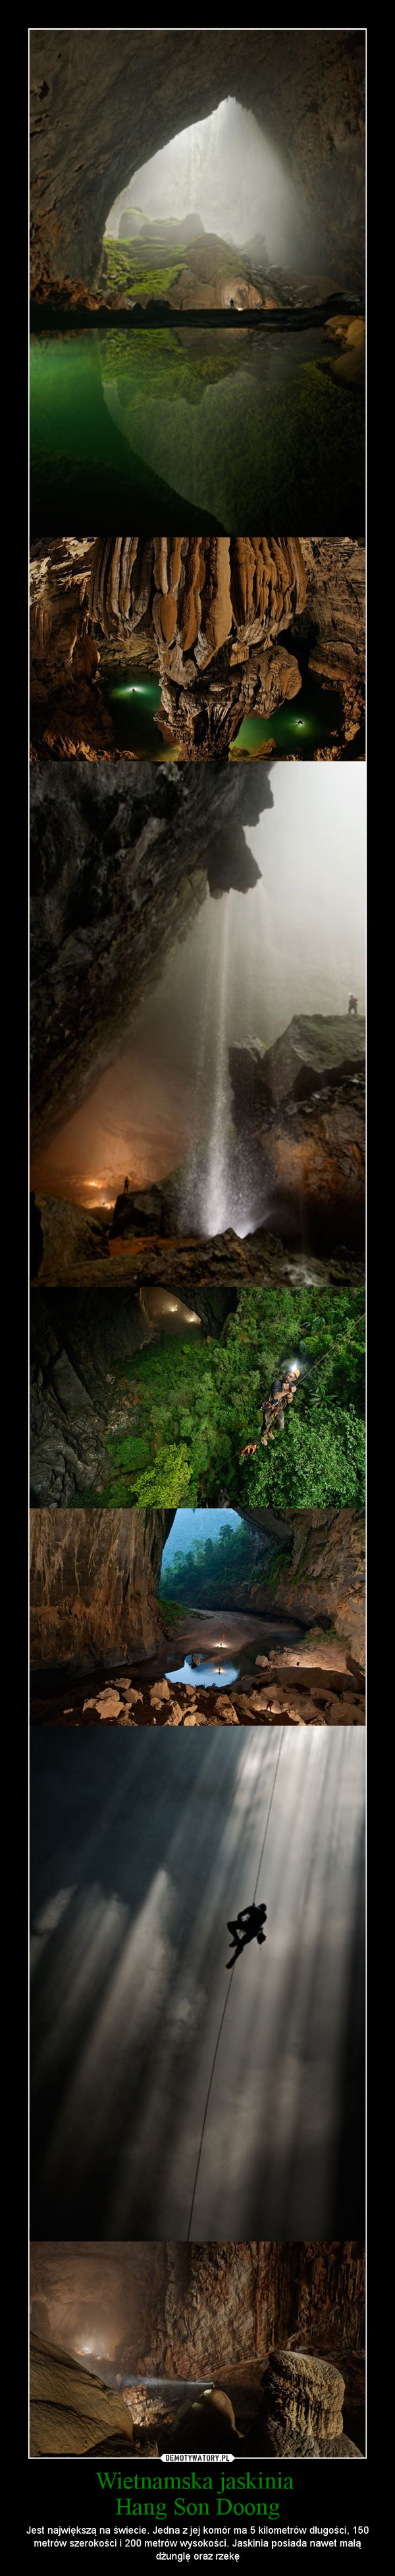 Wietnamska jaskinia 
Hang Son Doong